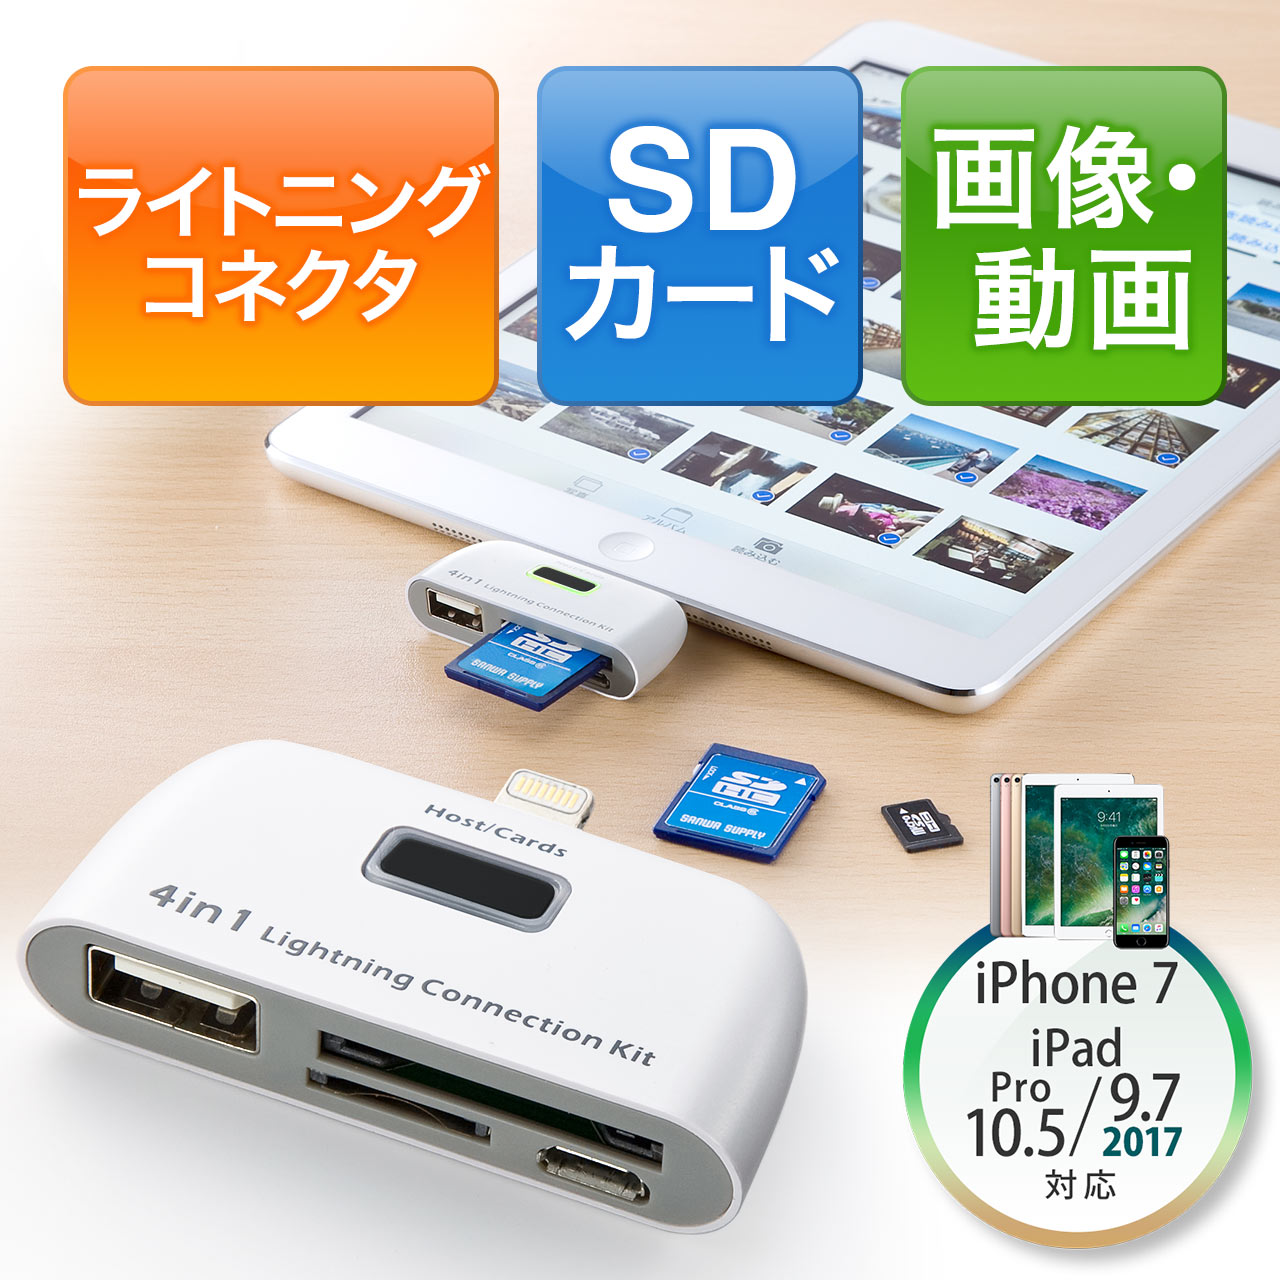 ★iPhone iPad用 SD ★カードリーダー★